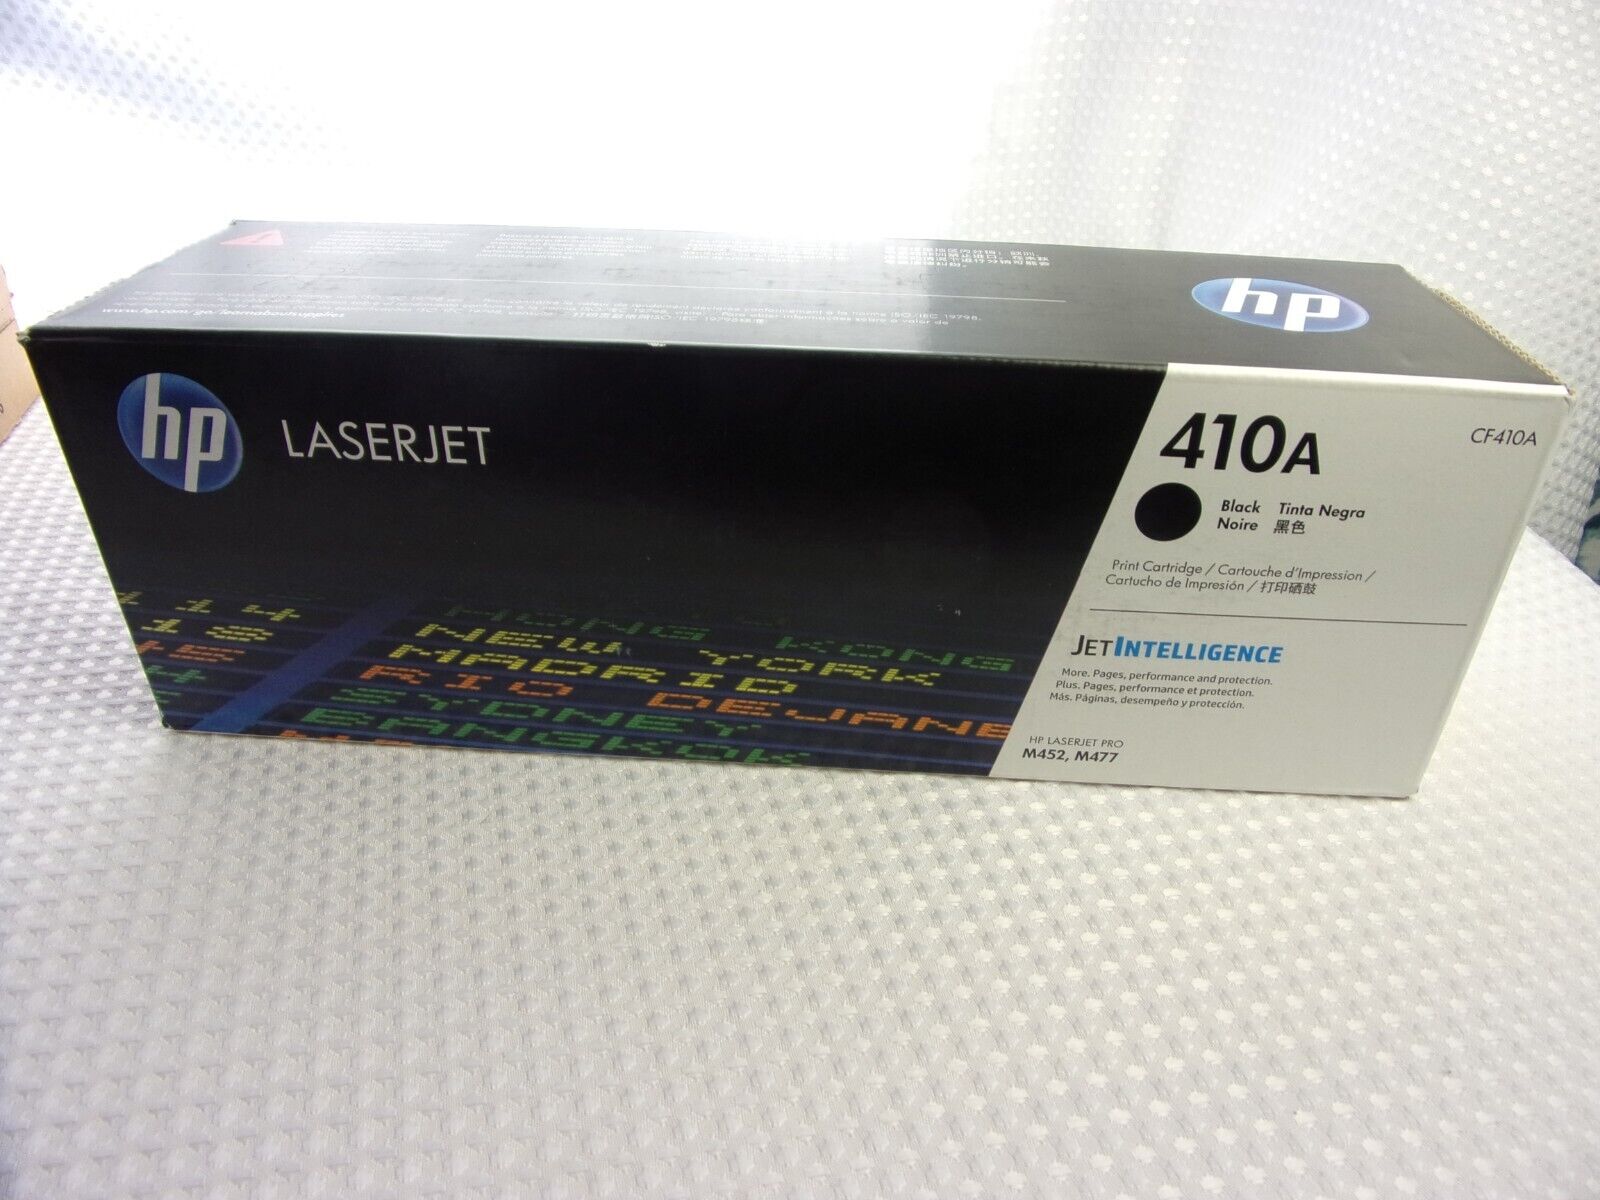 1 Genuine HP LaserJet 410A Black CF410A Toner Cartridge - NEW - Sealed Box Blk